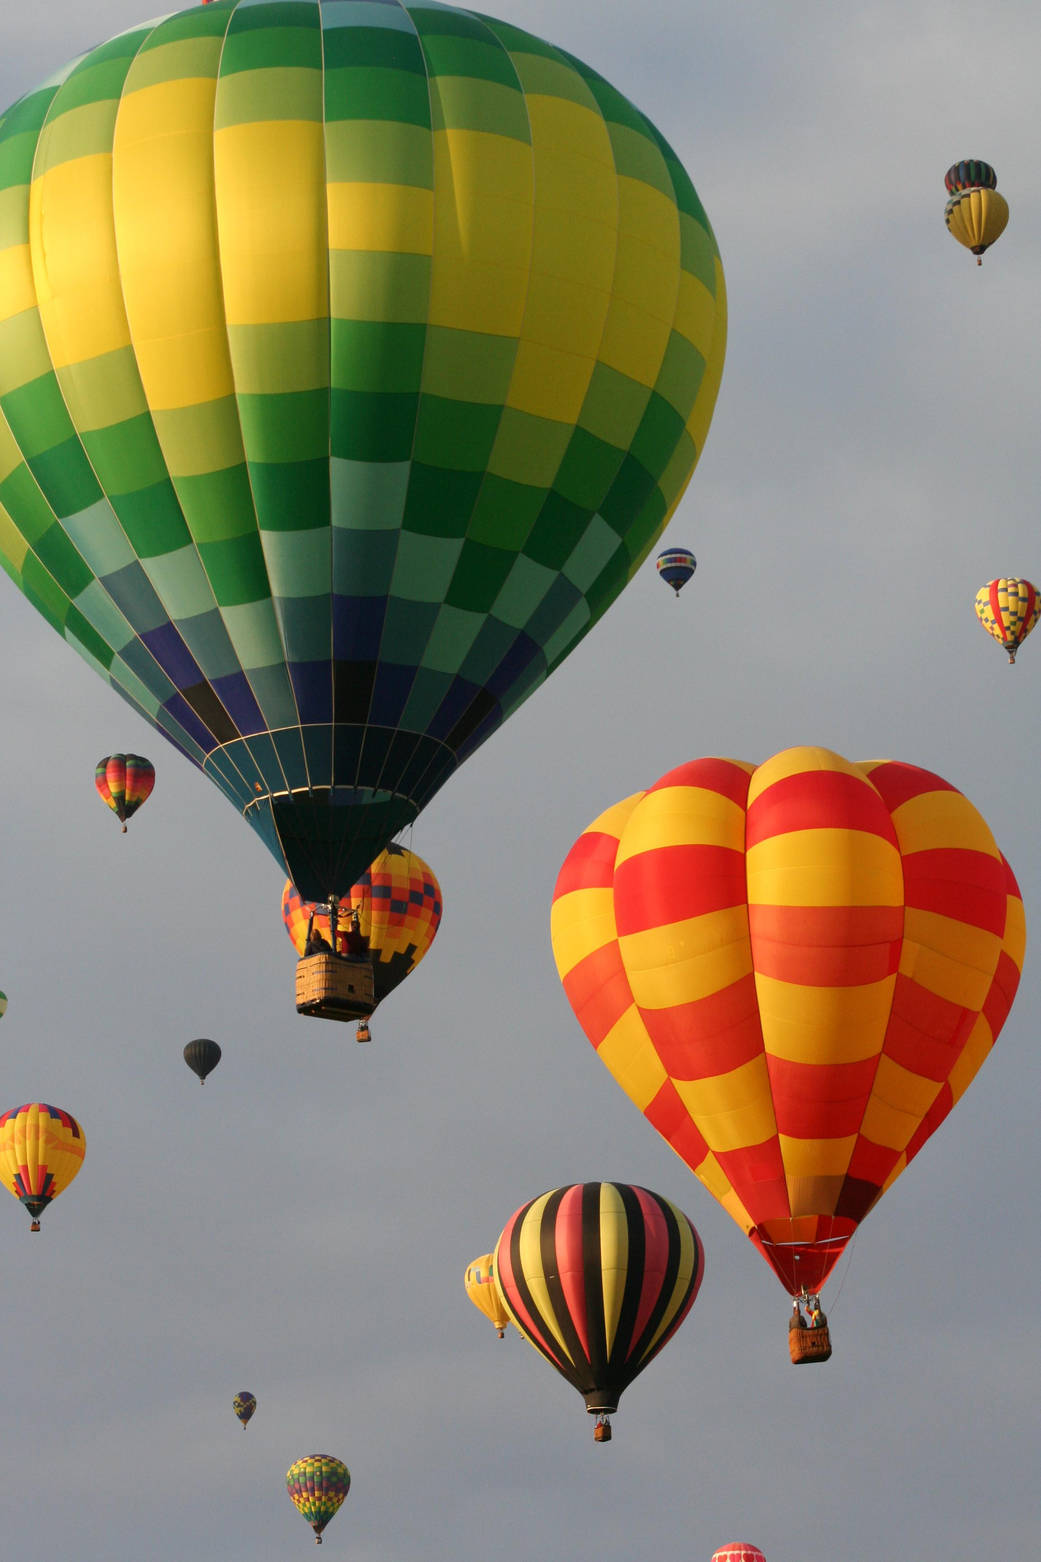 Hot air balloons lift off en masse under sullen skies at the Albuquerque International Balloon Fiesta in Albuquerque, N.M.